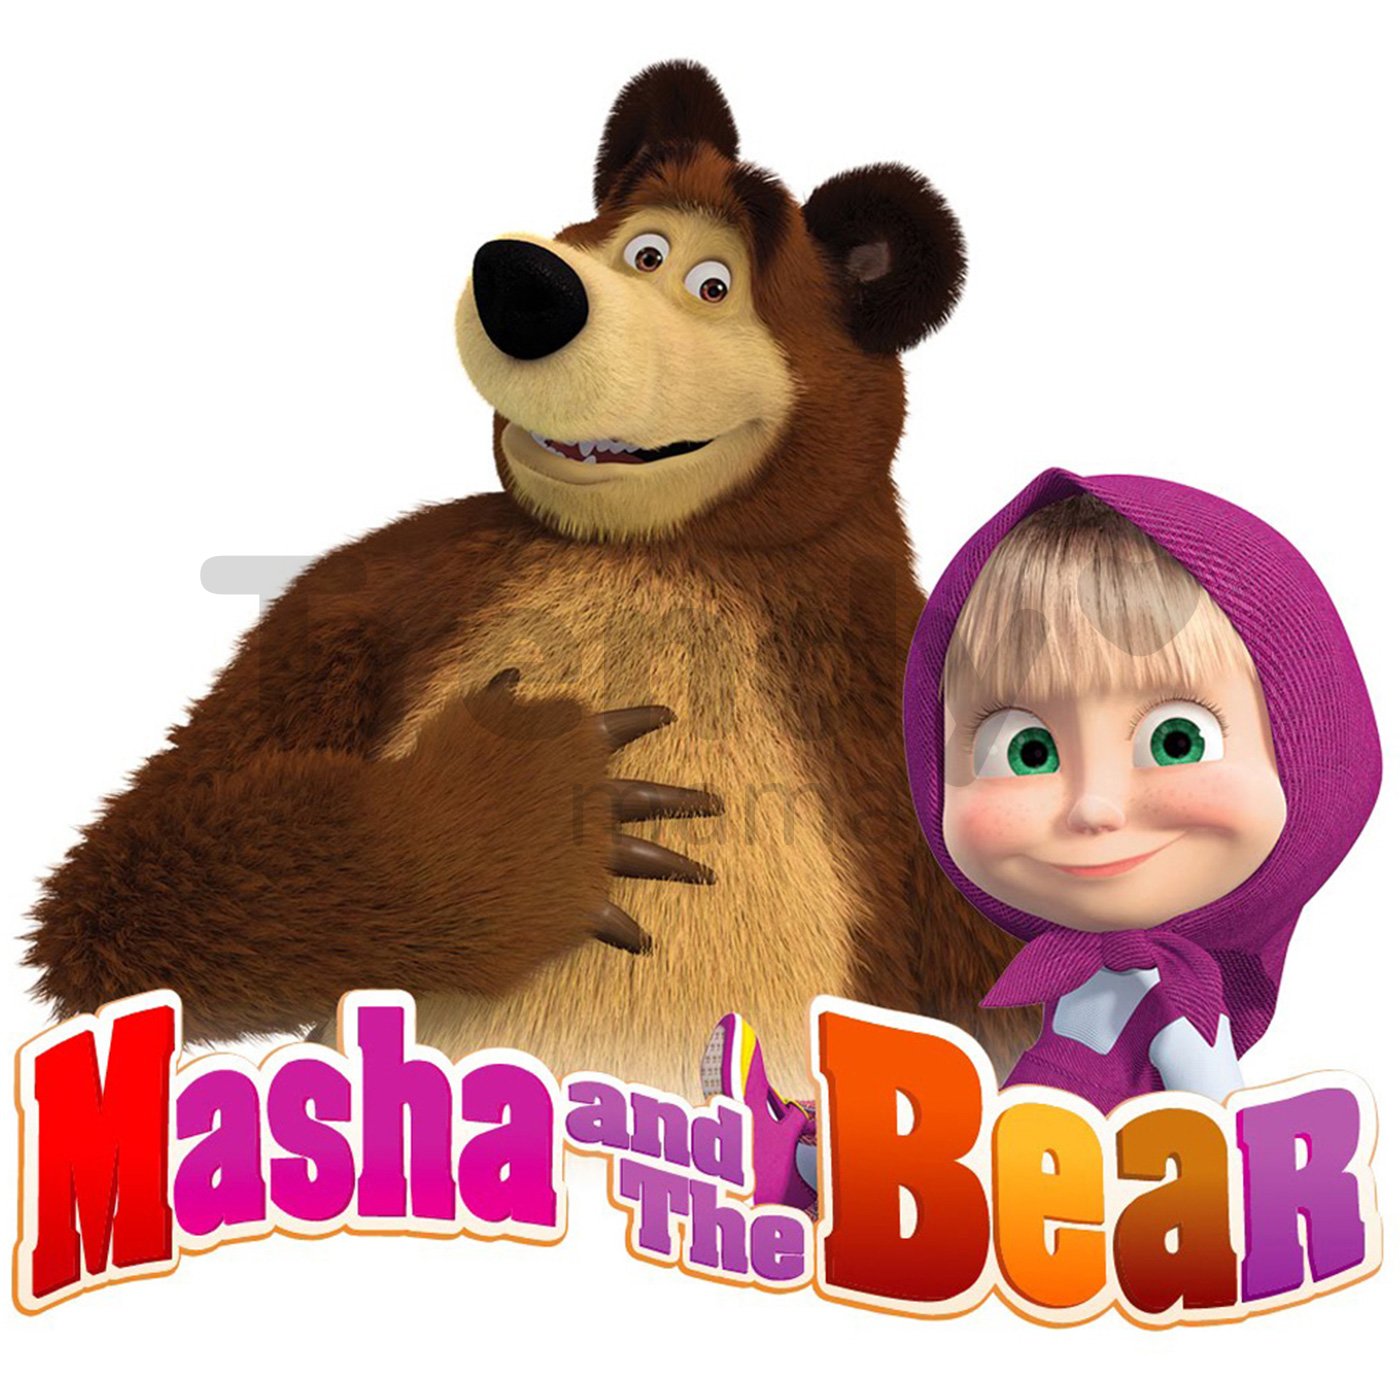 Друг машка. Маша and the Bear. Маша и медведь картинки. Машка и медведь картинки. Маша и медведь картинки для детей.